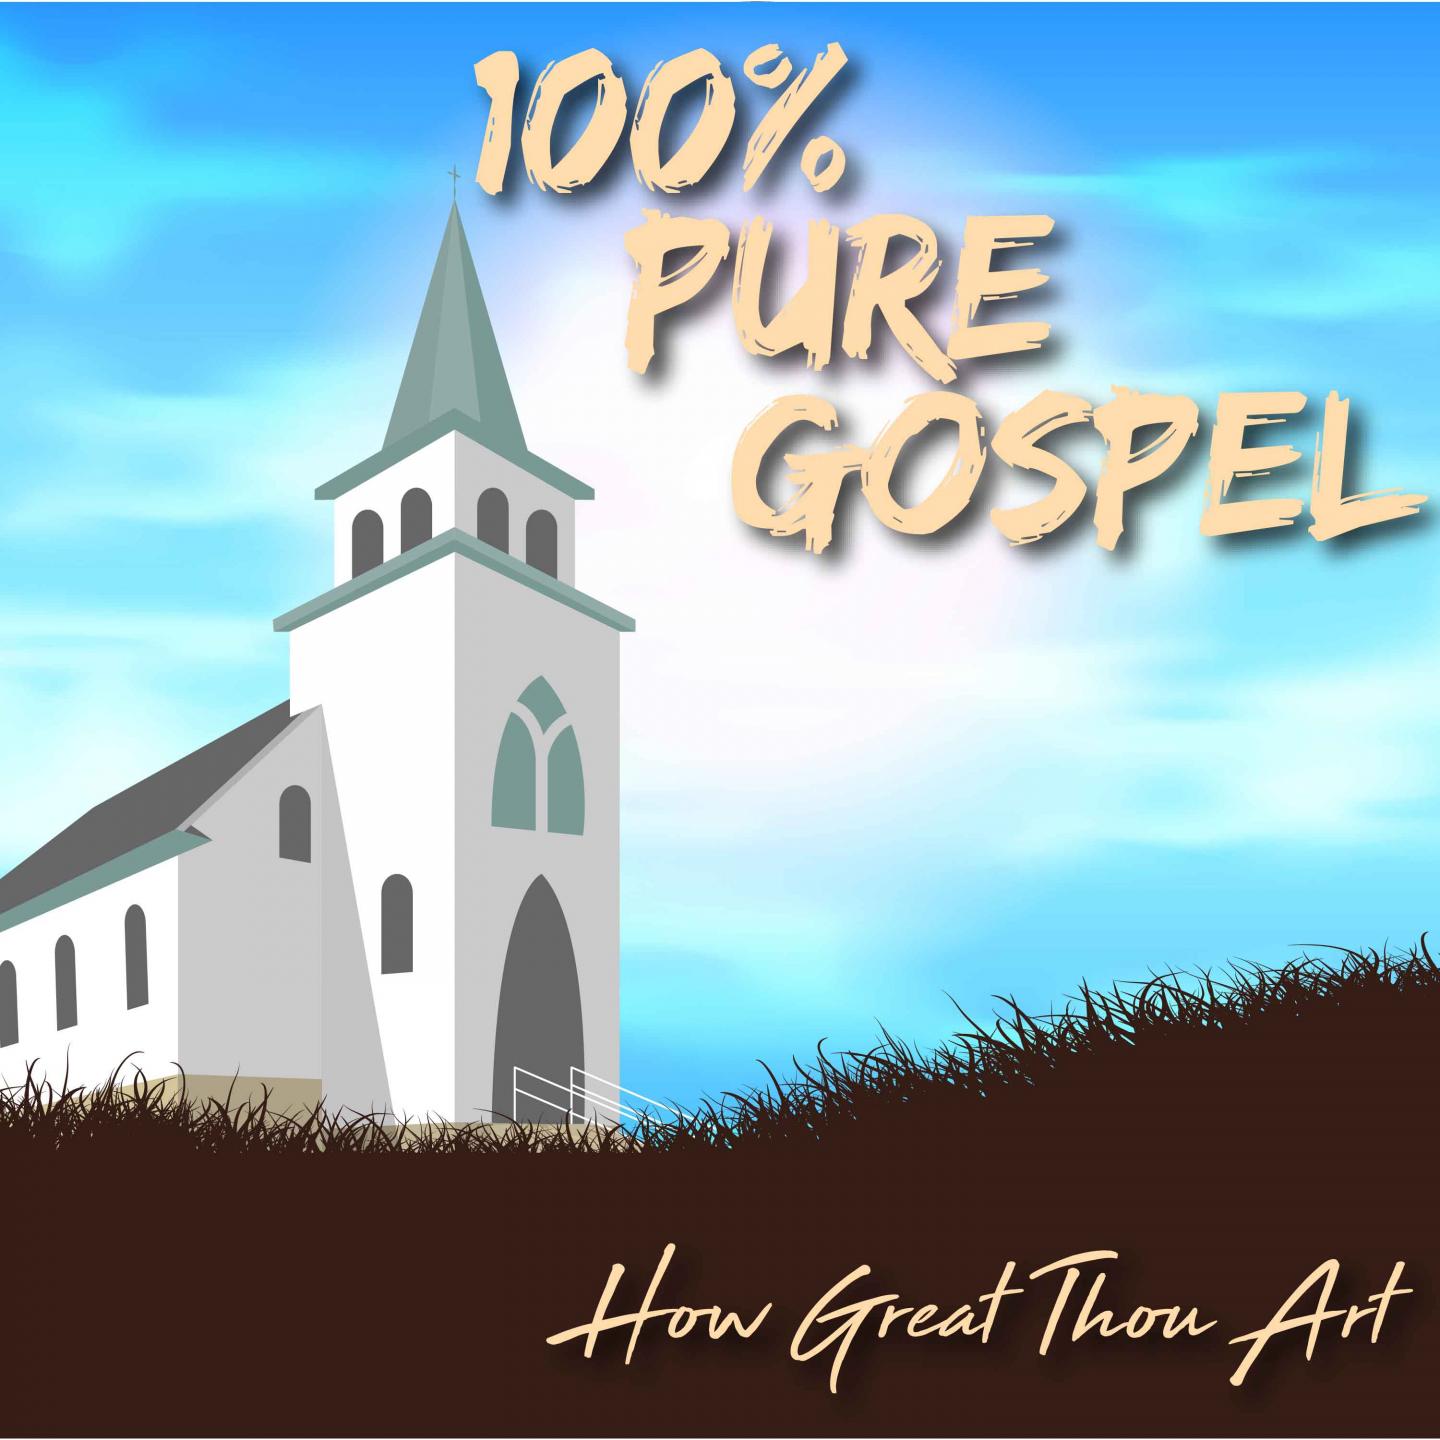 100% Pure Gospel / How Great Thou Art